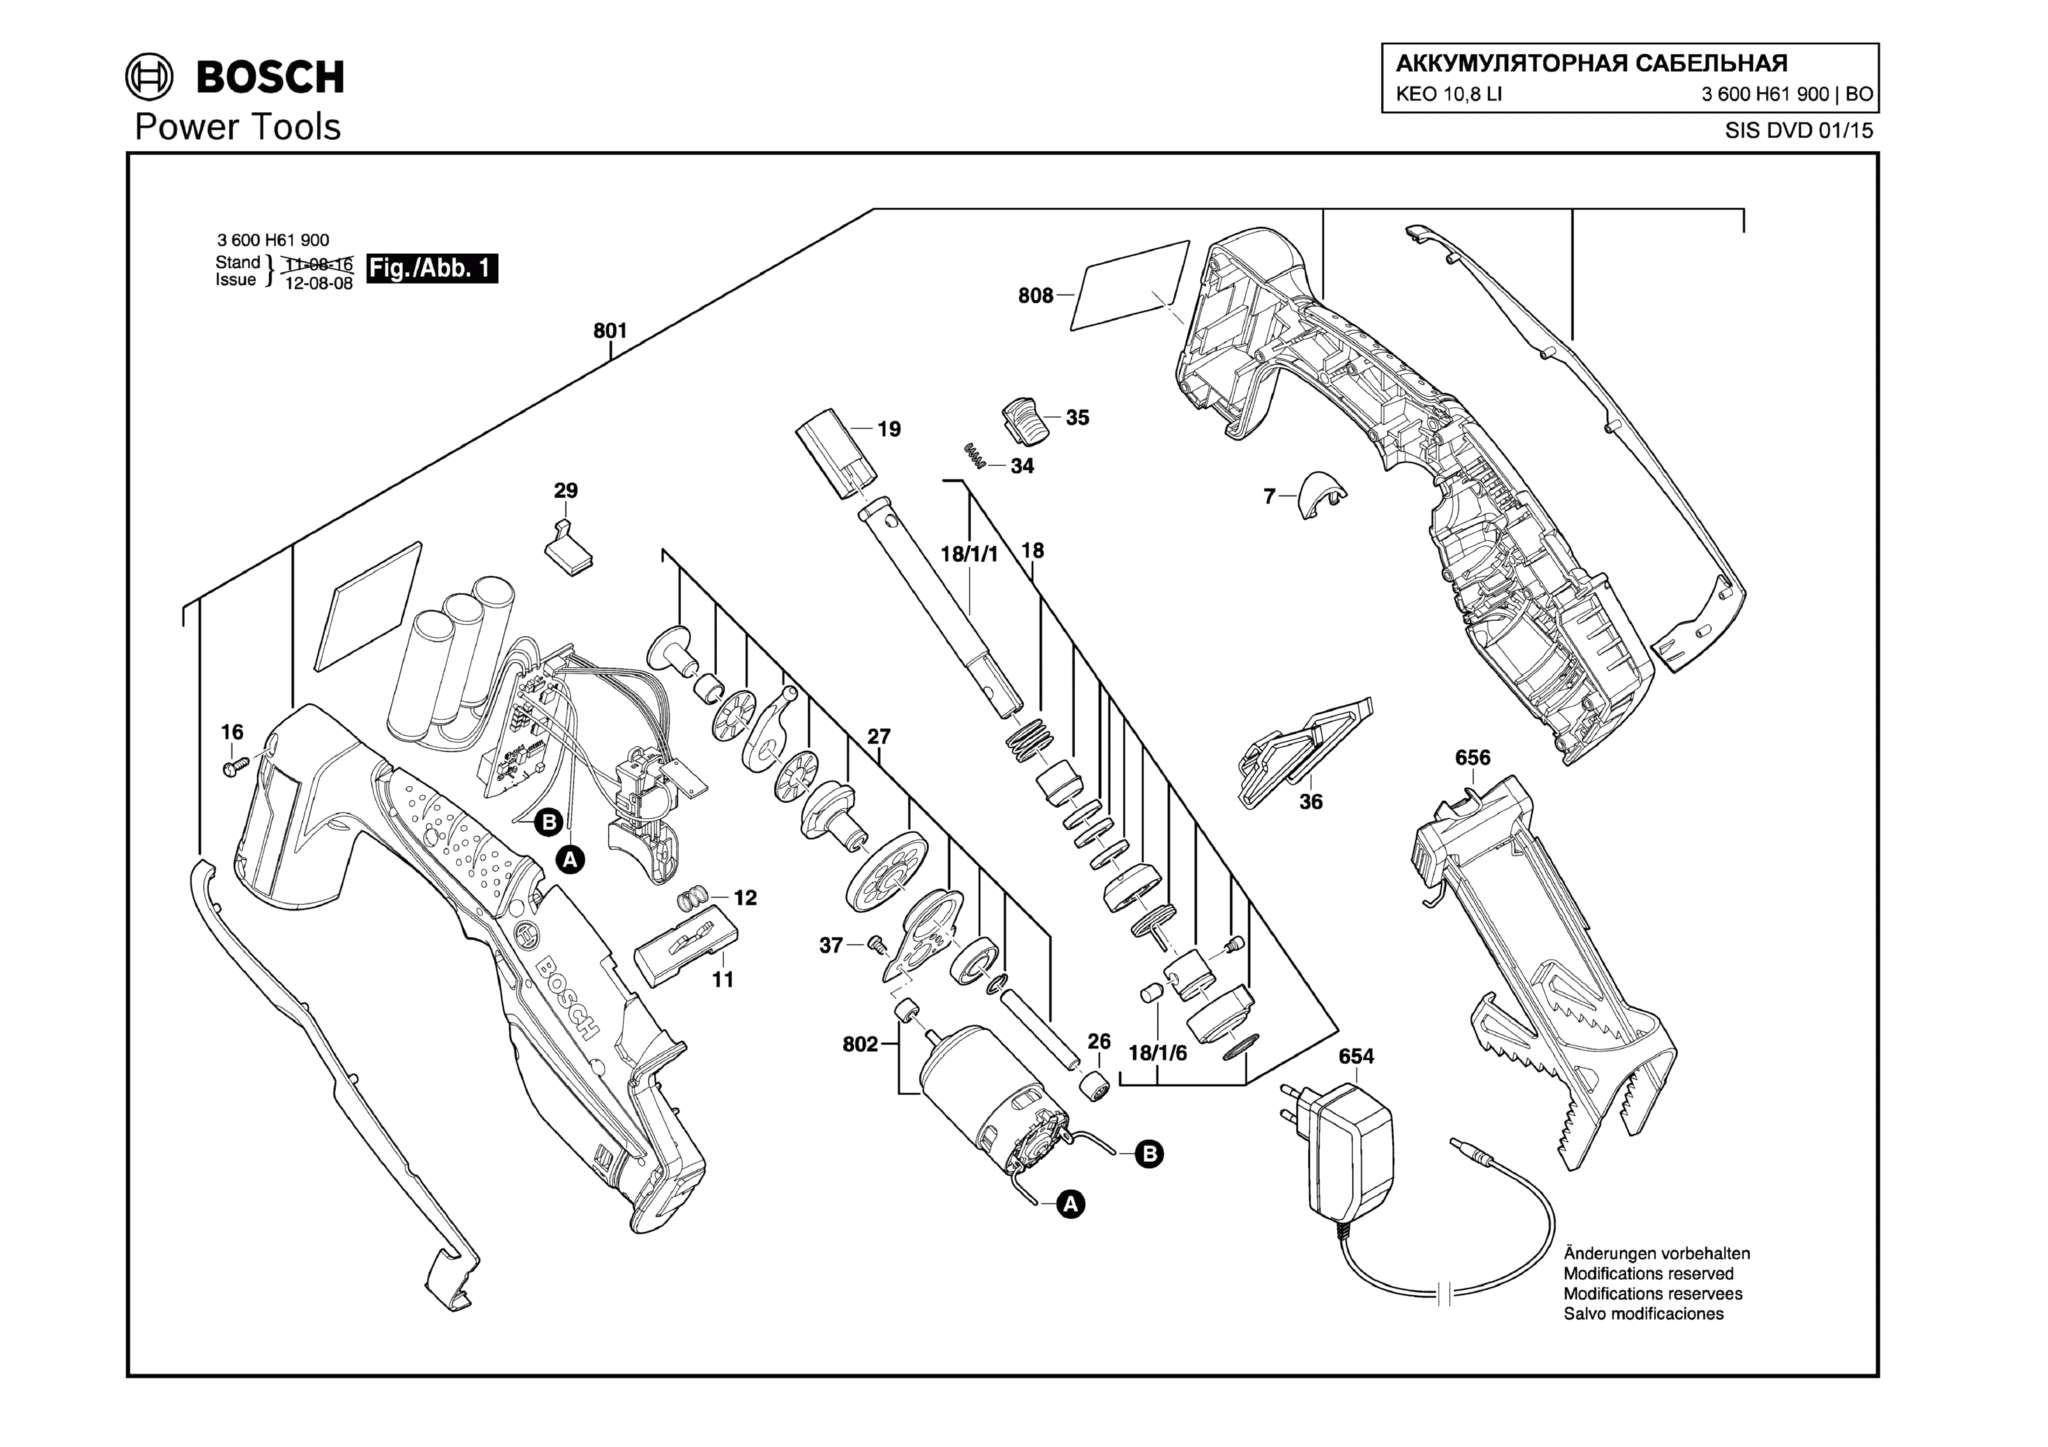 Запчасти, схема и деталировка Bosch KEO 10,8 LI (ТИП 3600H61900)